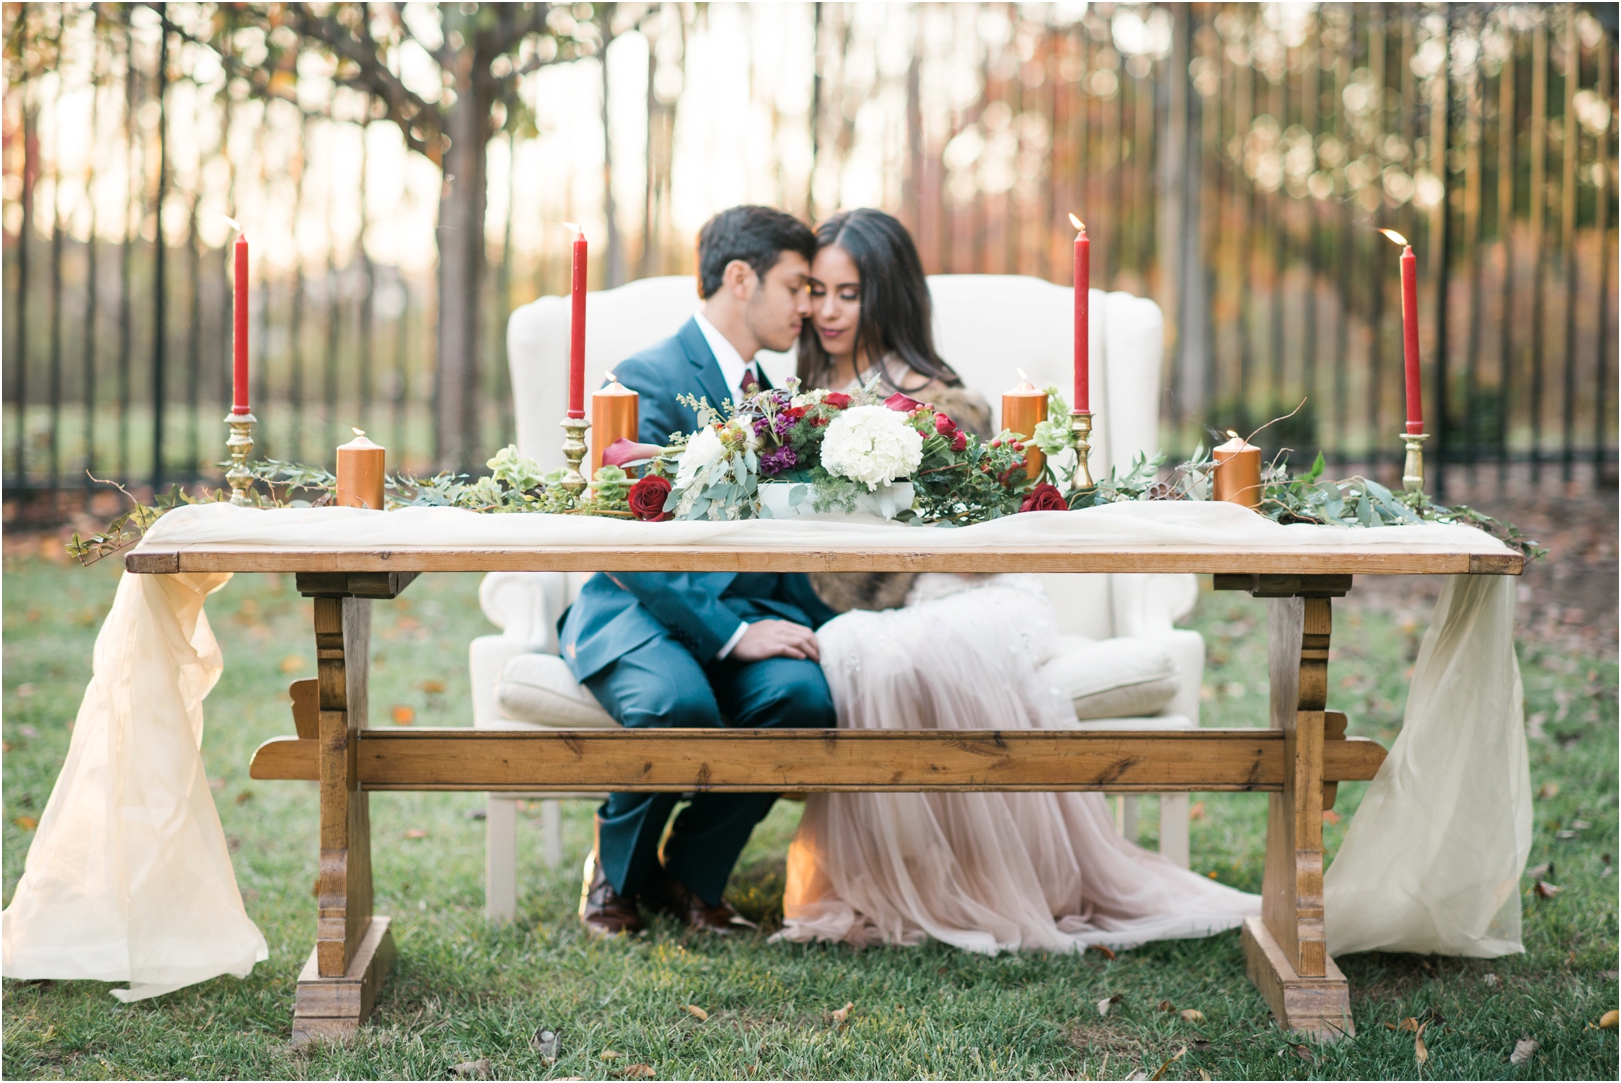 bare wood wedding table setup inspiration with candles